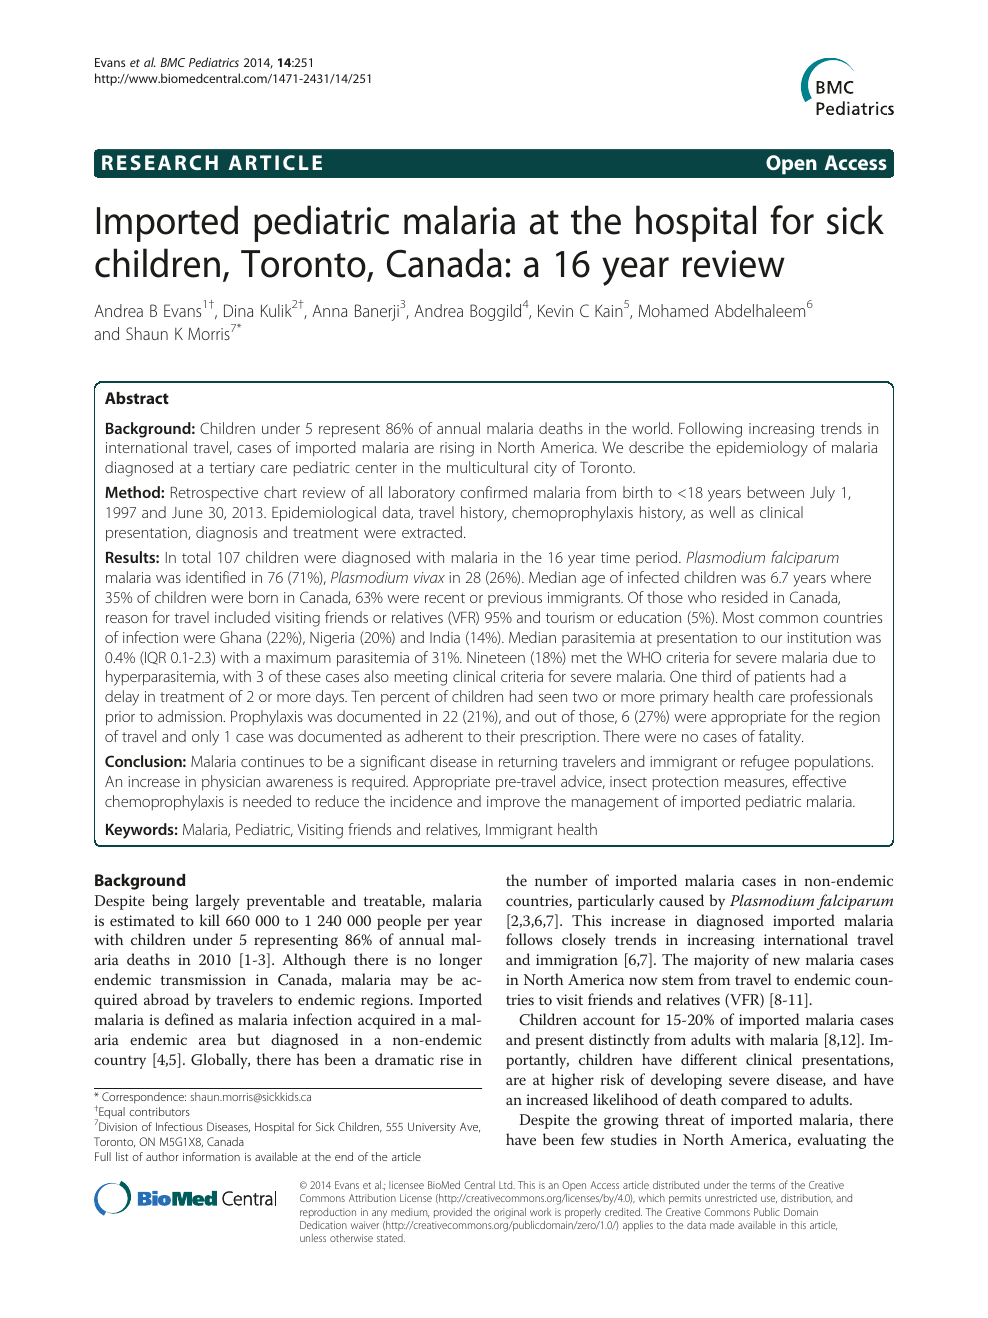 Malaria Prophylaxis Chart